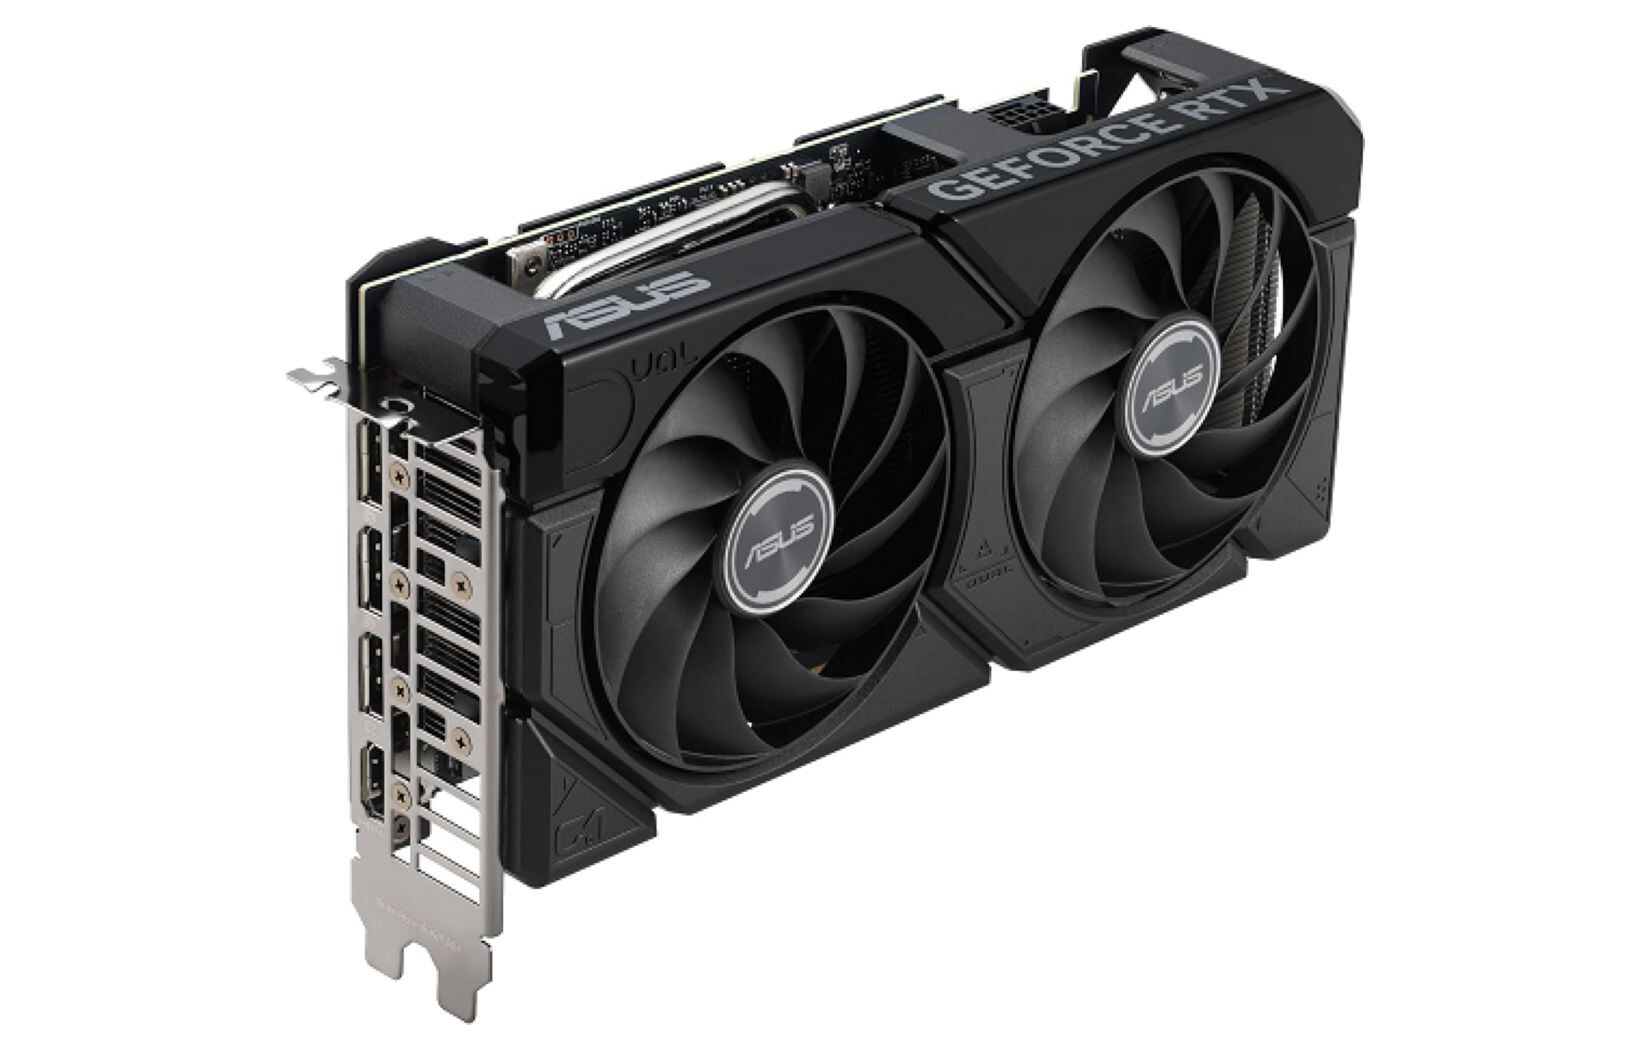 NVIDIA GeForce RTX 4070 SUPER rumored to feature 16GB memory and AD103 GPU  